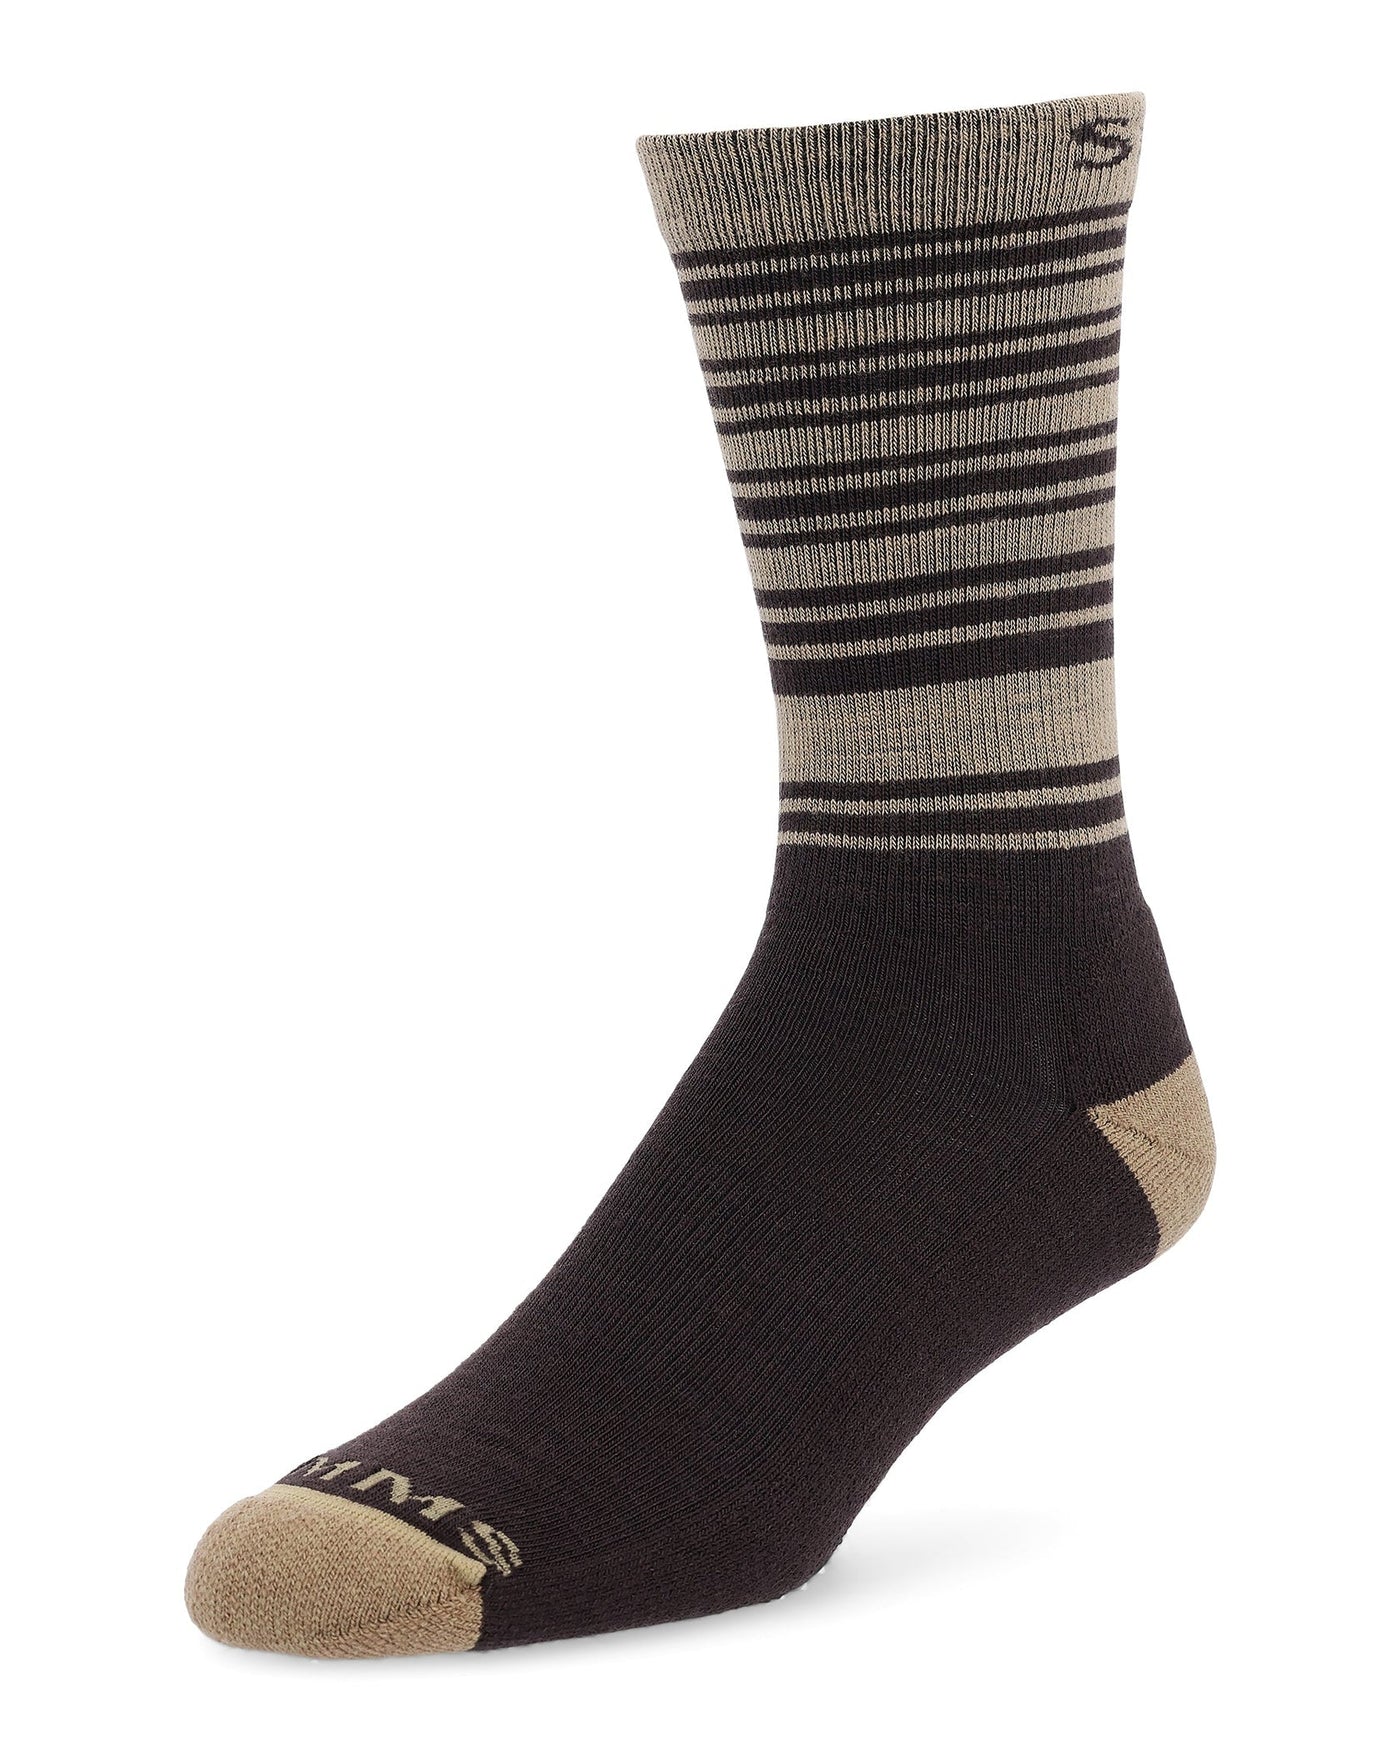 Simms Men’s Merino Lightweight Hiker Socks